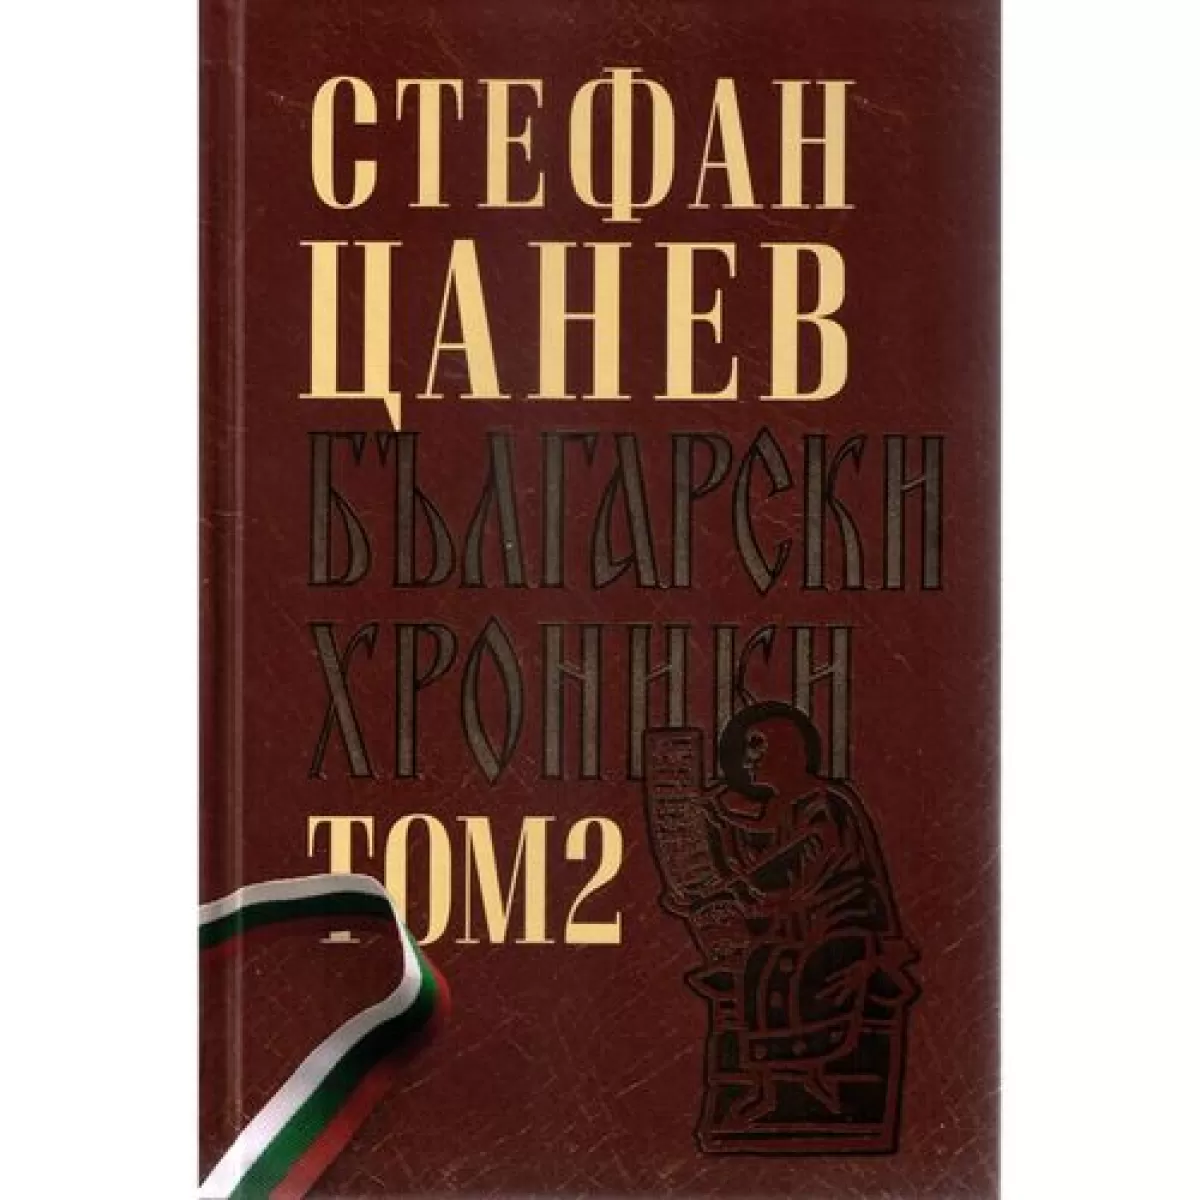 Български хроники: двутомно луксозно издание - том 2 (твърди корици)